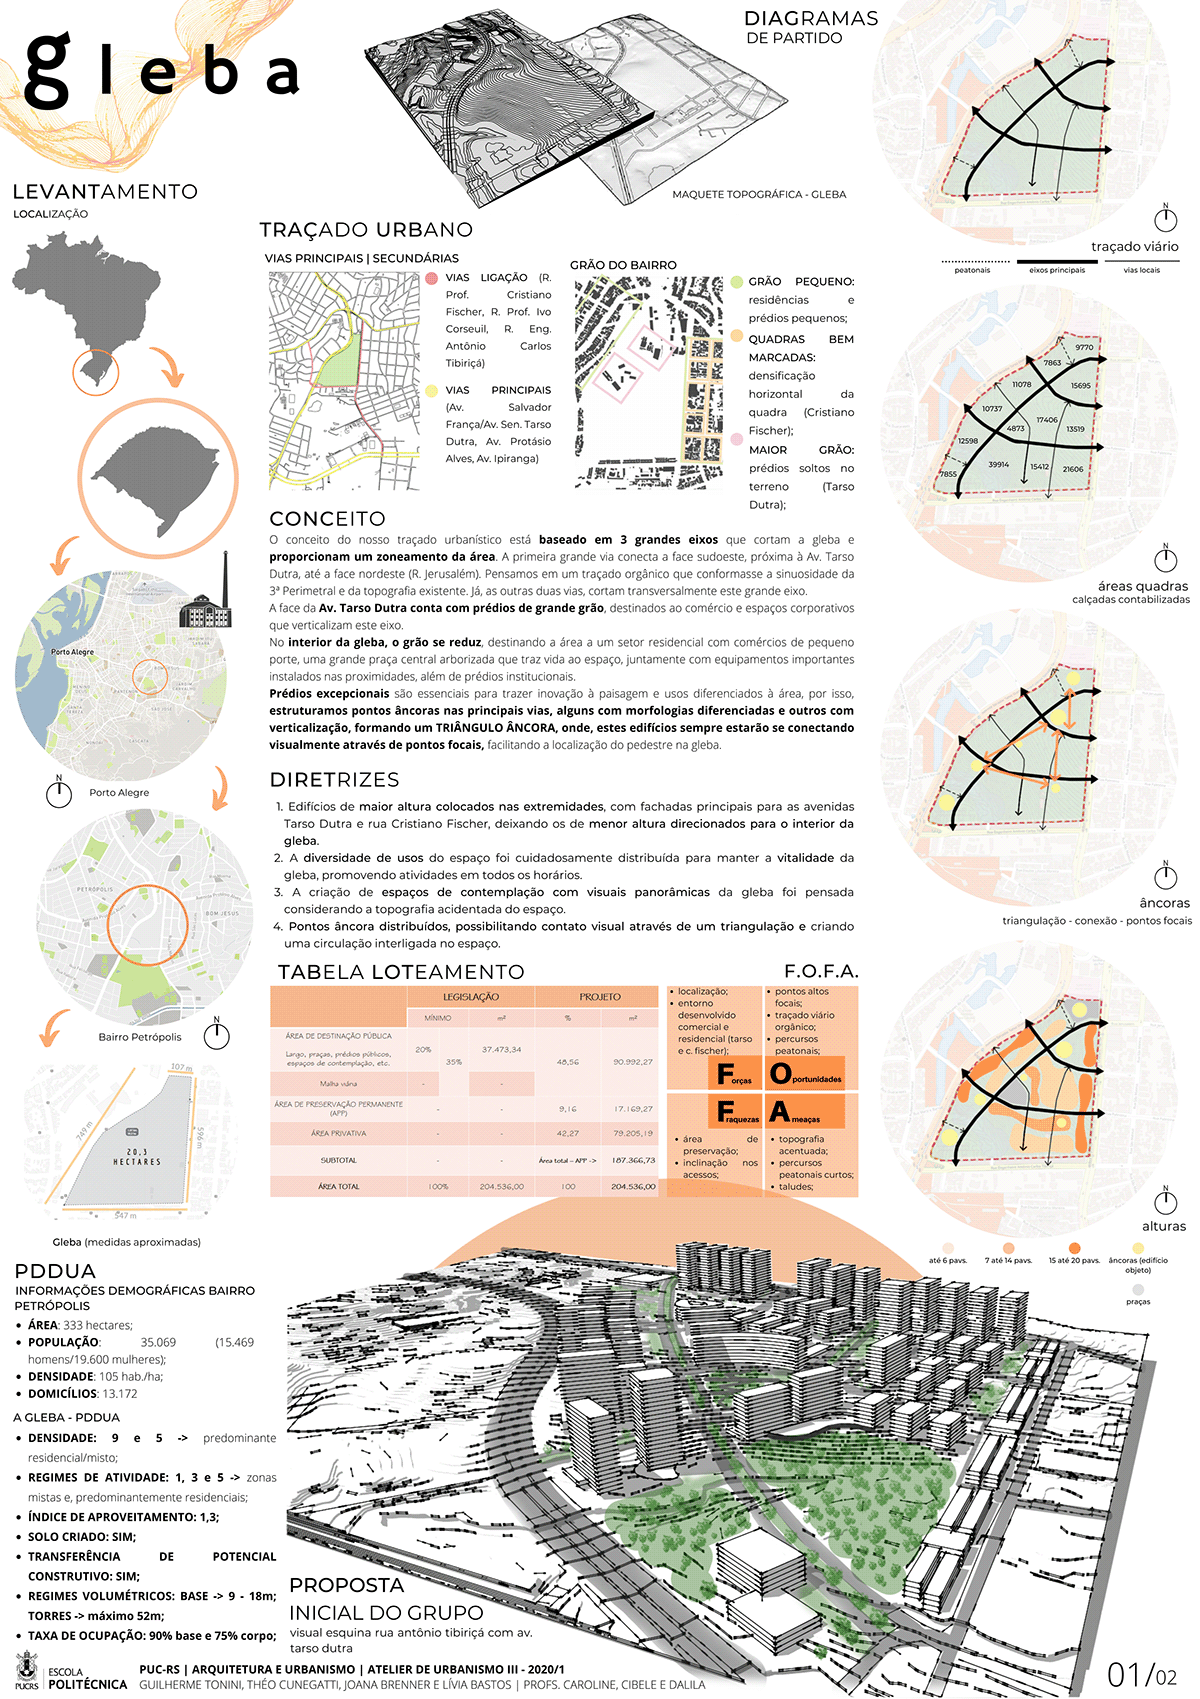 Plano Urbanístico - Ateliê de Urbanismo III on Behance